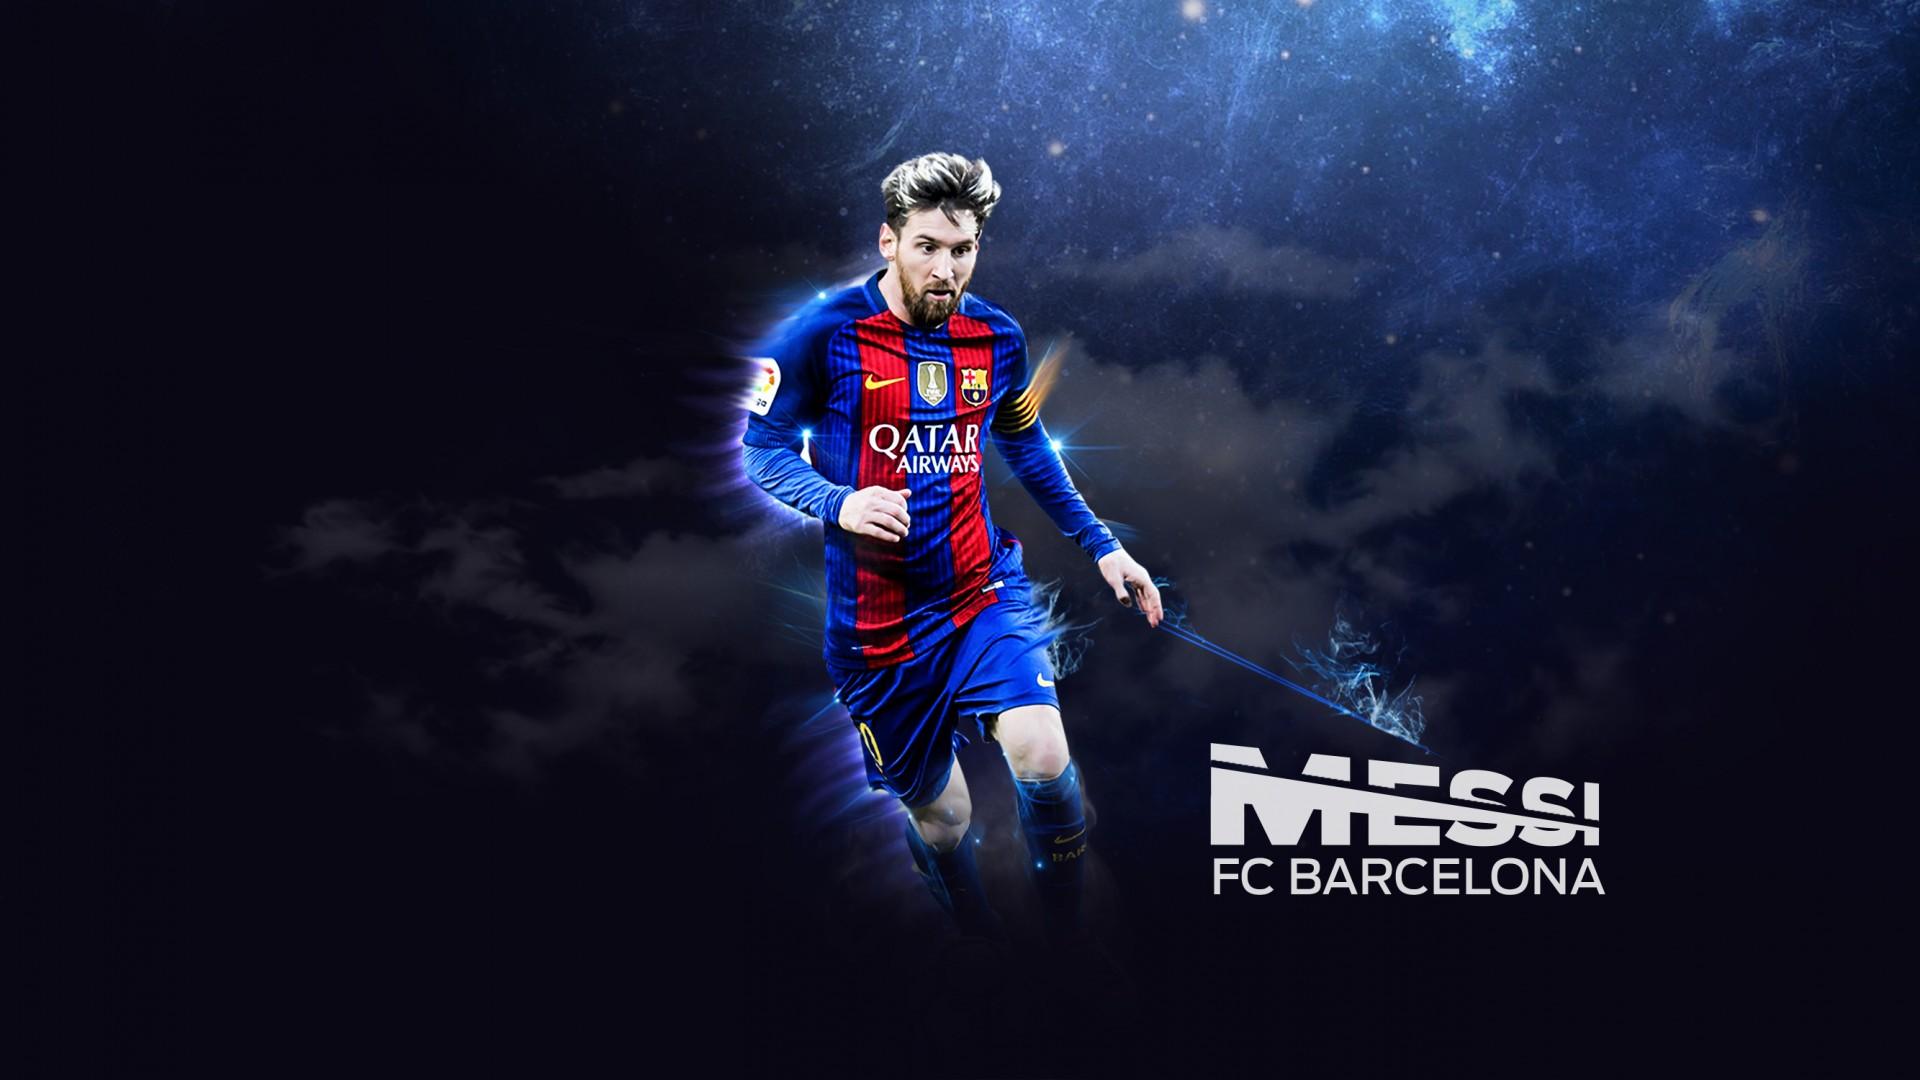 Lionel Messi HD wallpaper. Desktop Background image free